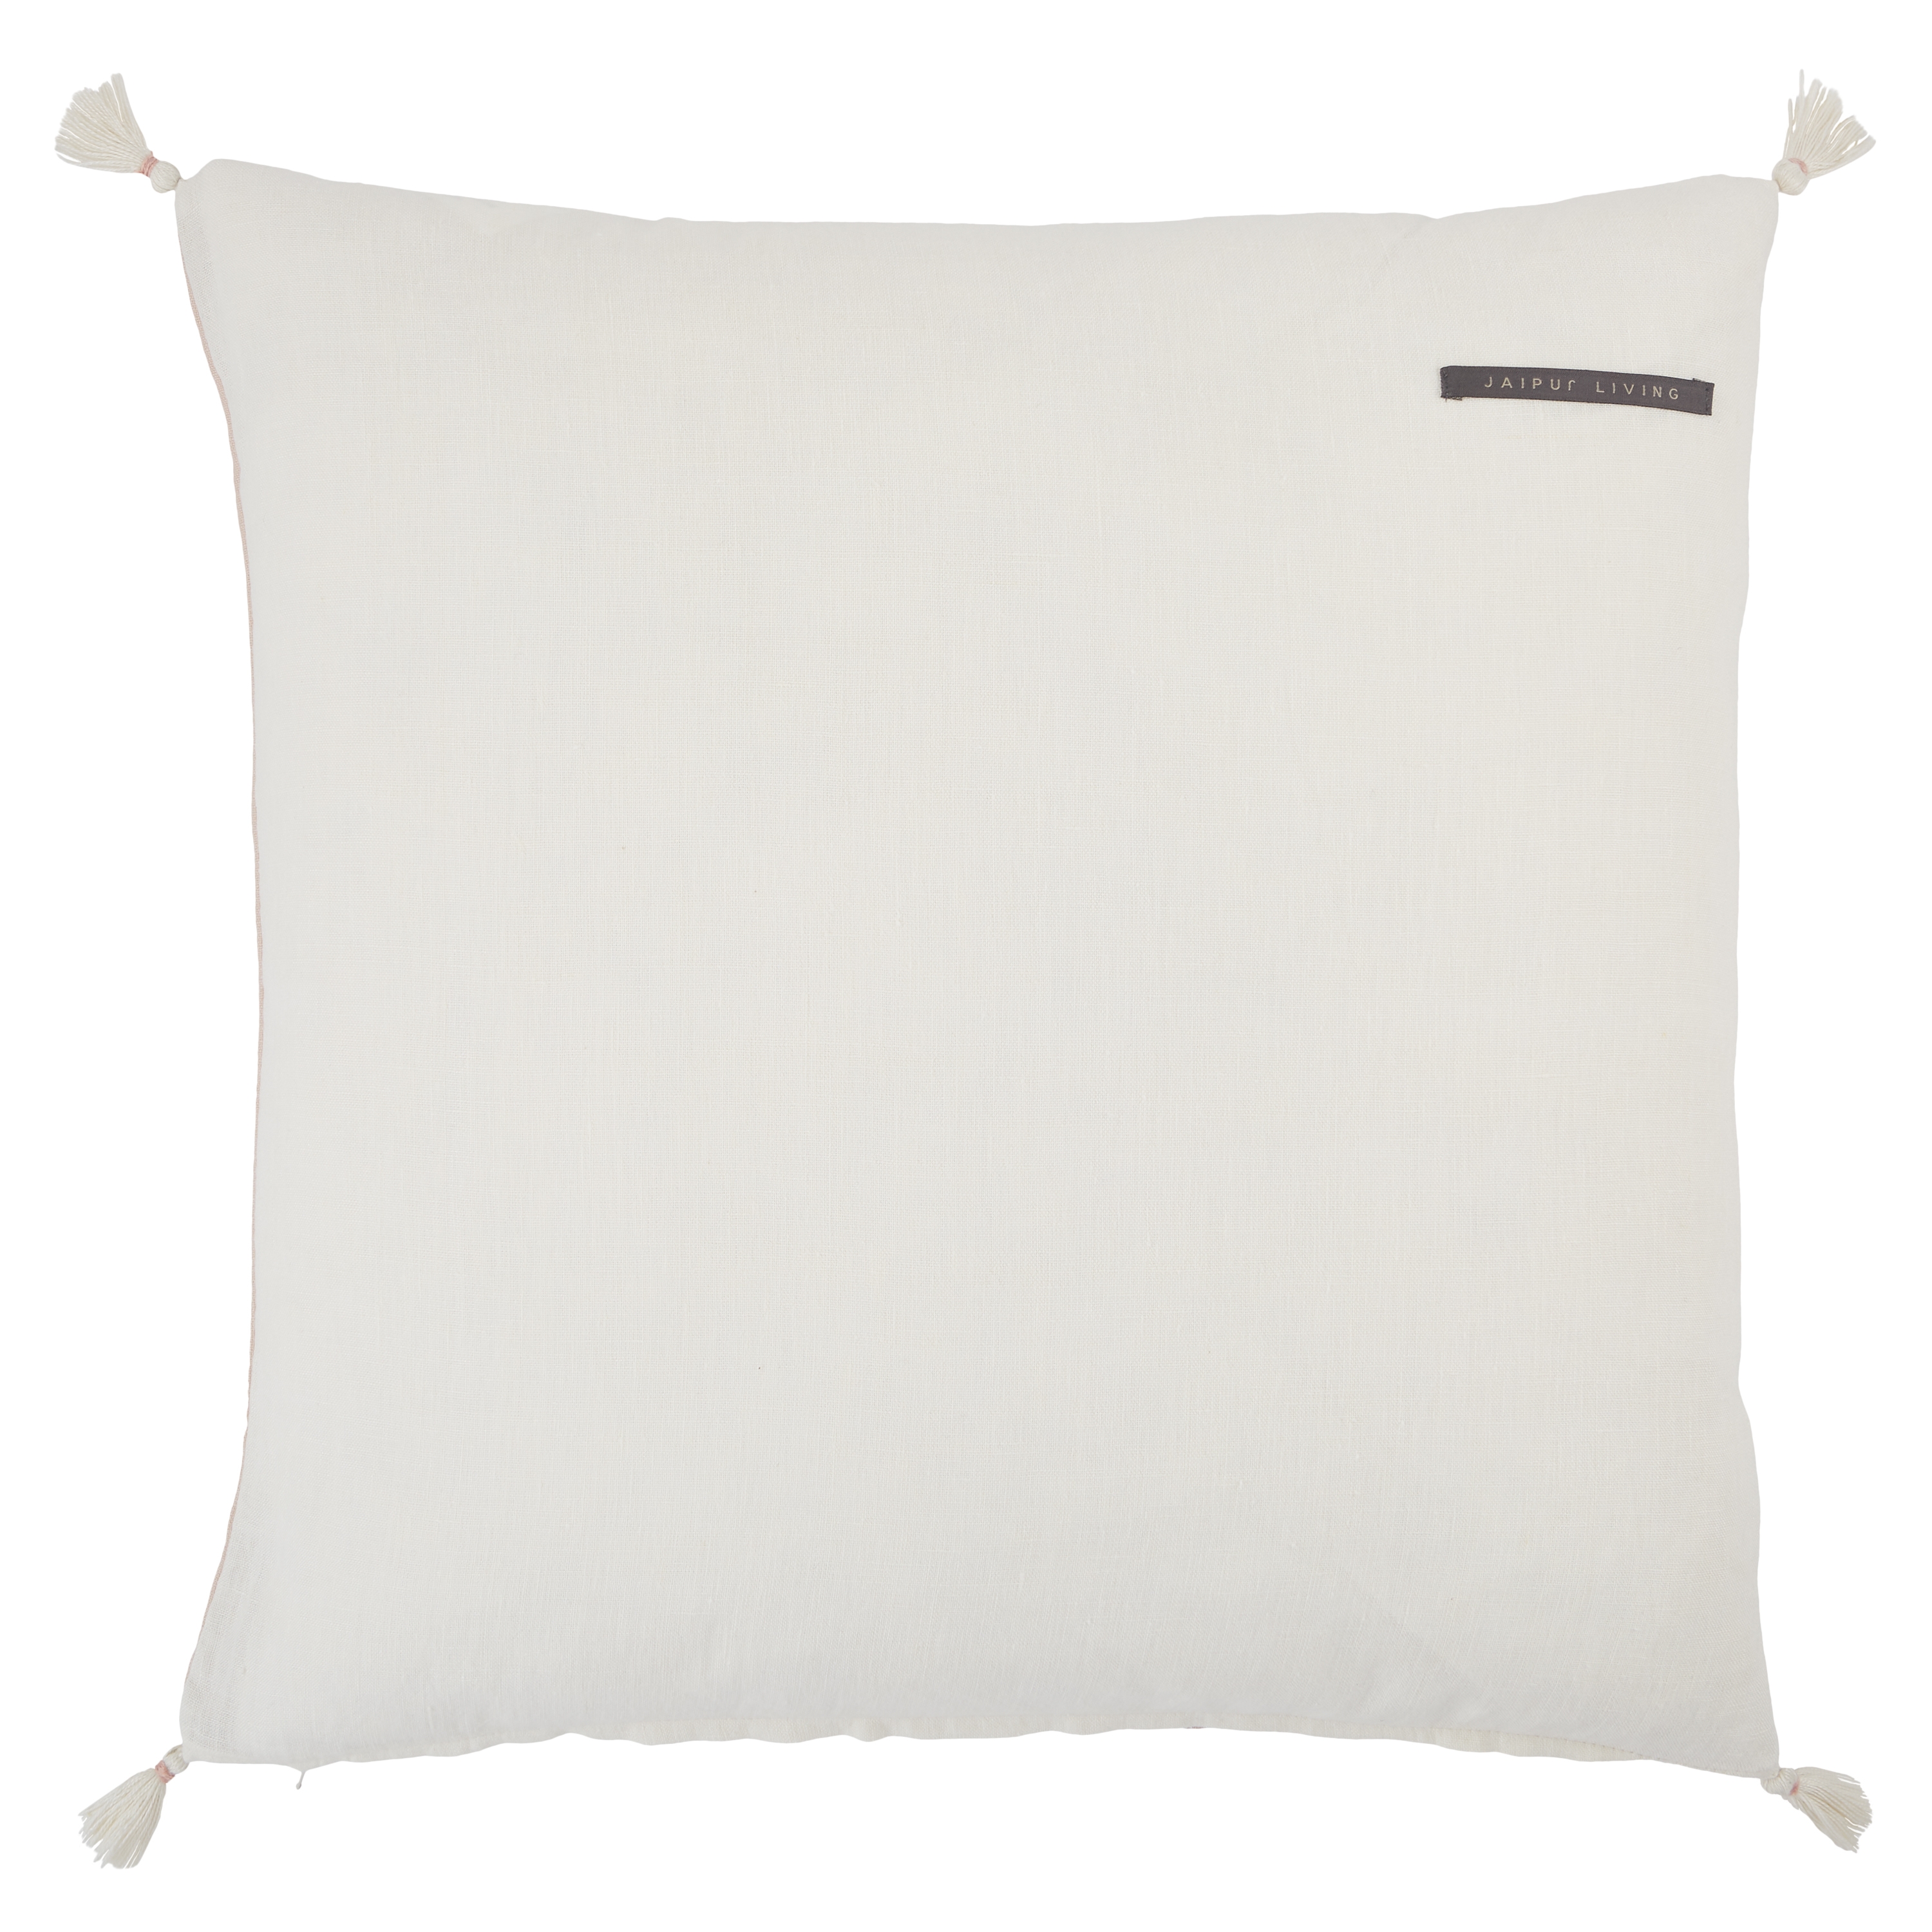 Joya Pillow, Blush, 22" x 22" - Image 1